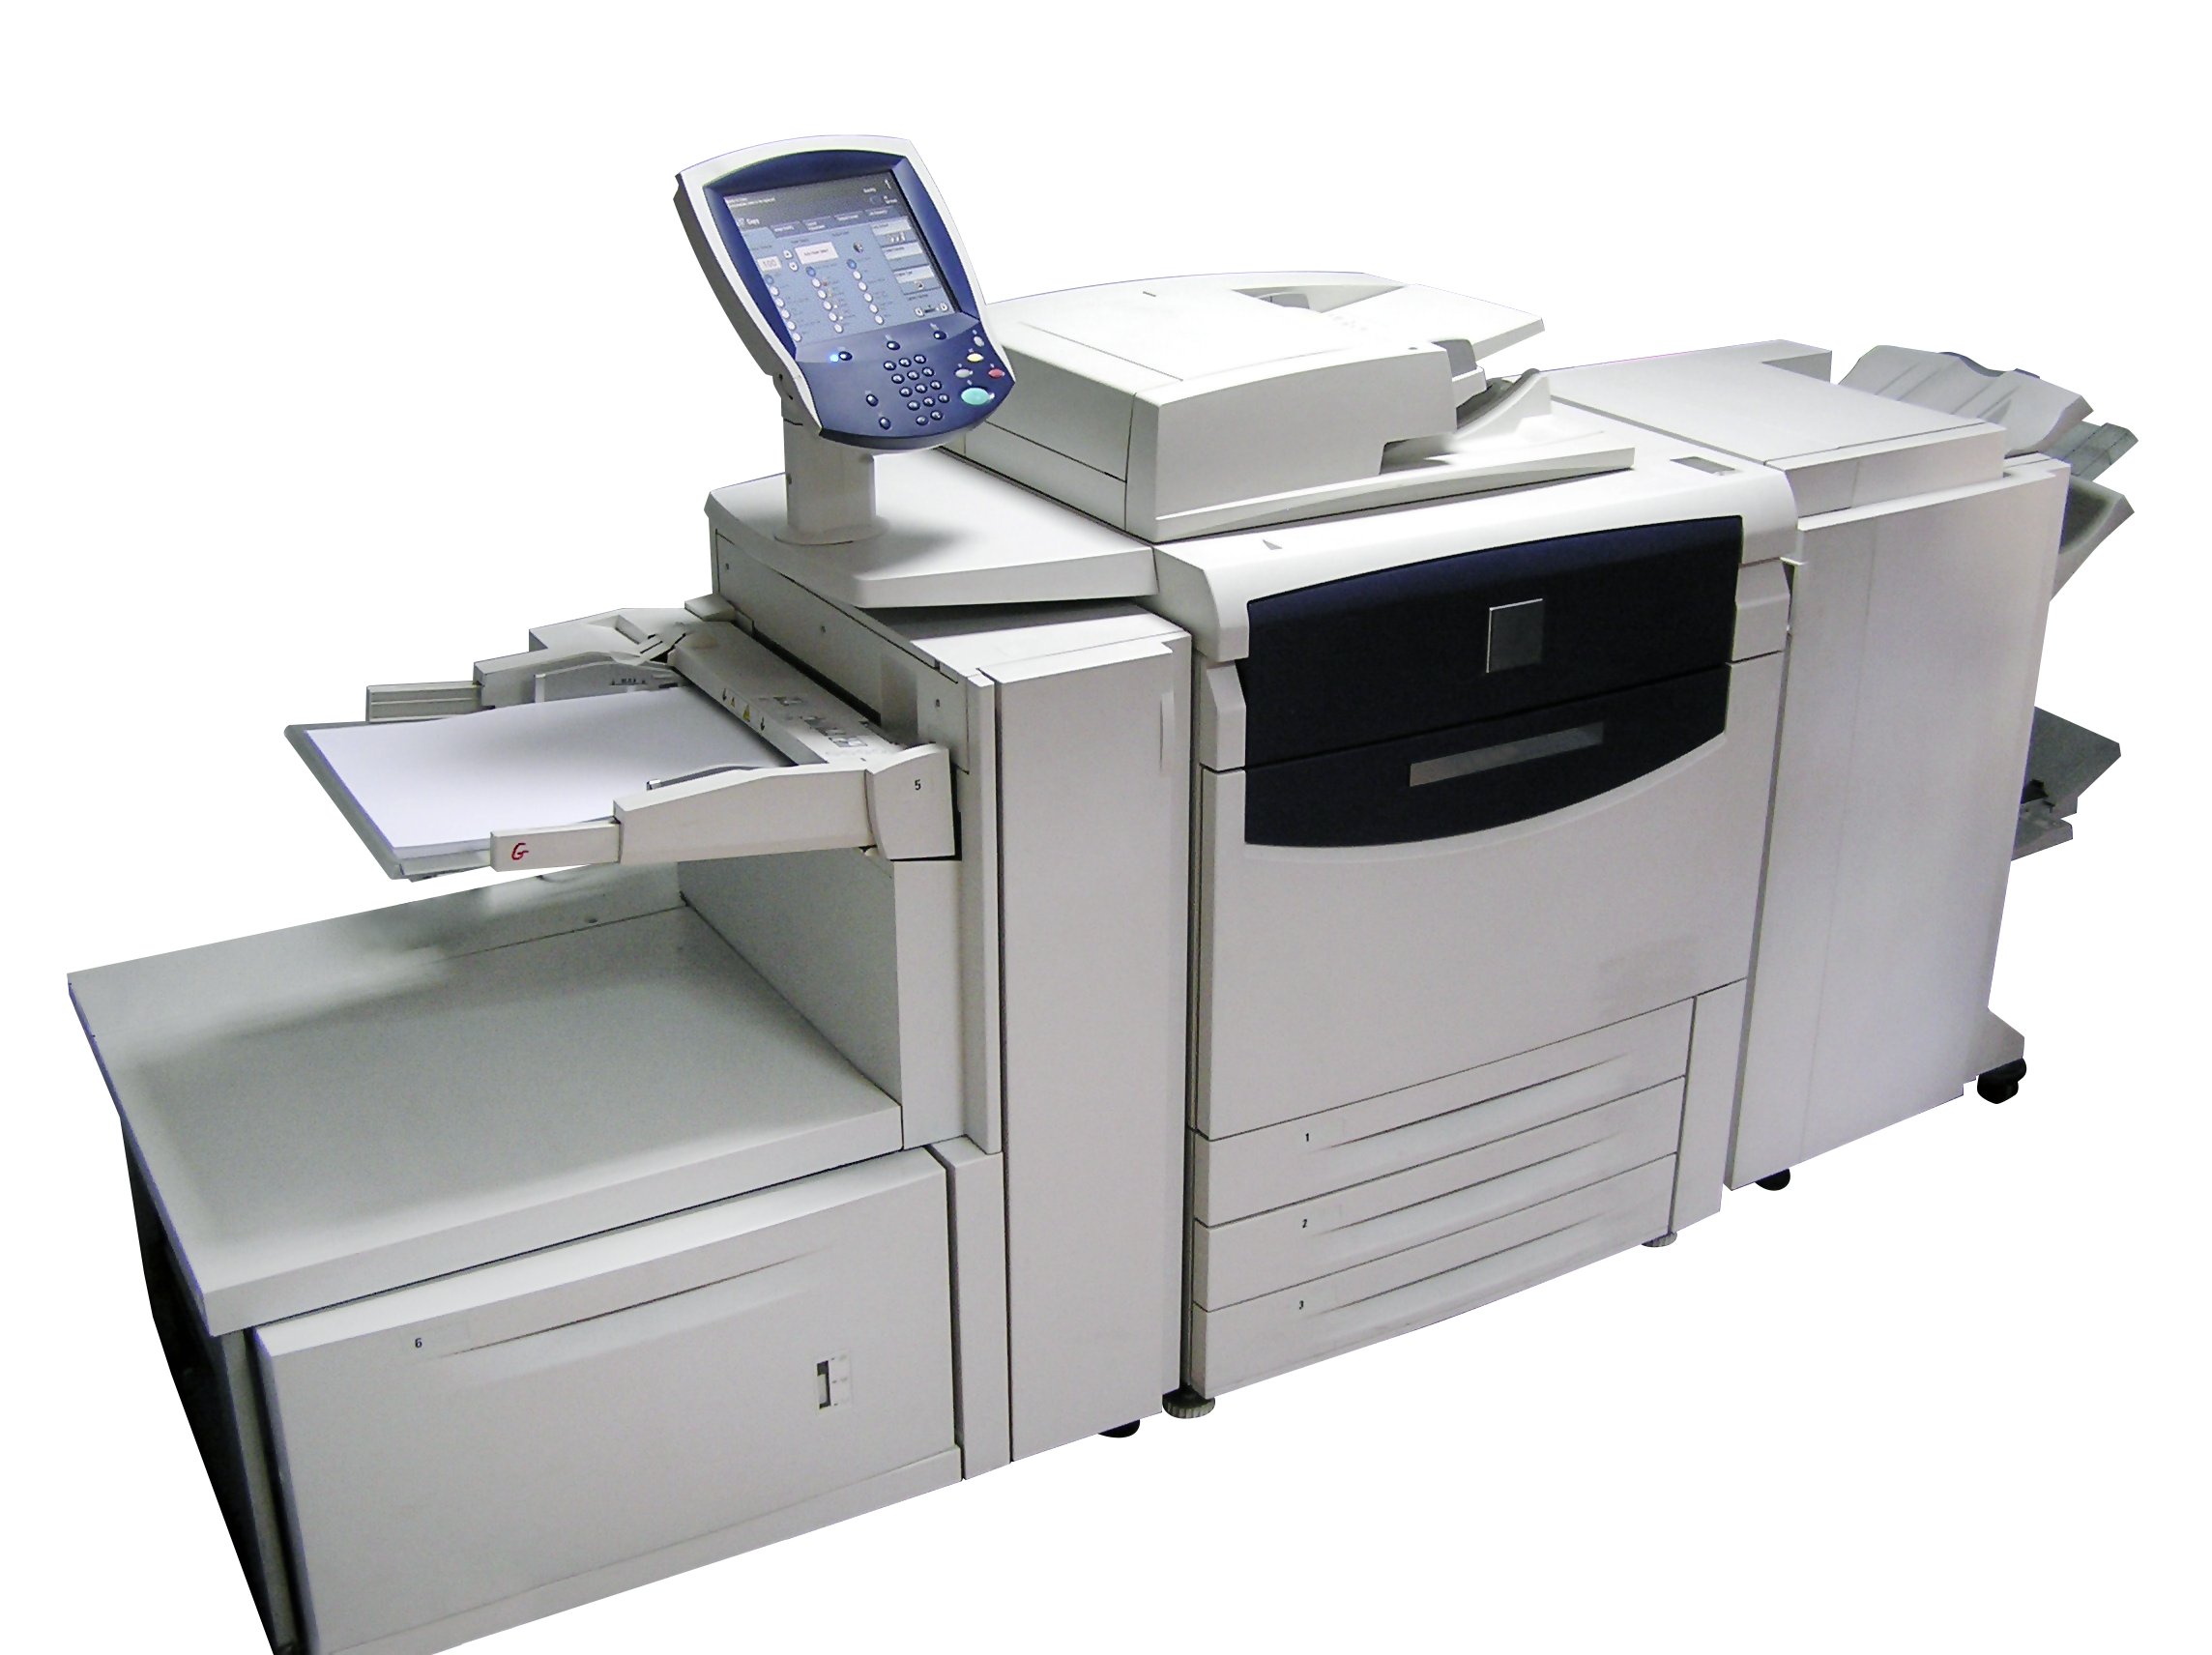 Xerox 700i/700 Digital Color Press with Xerox EX Print Server (powered by Fiery)